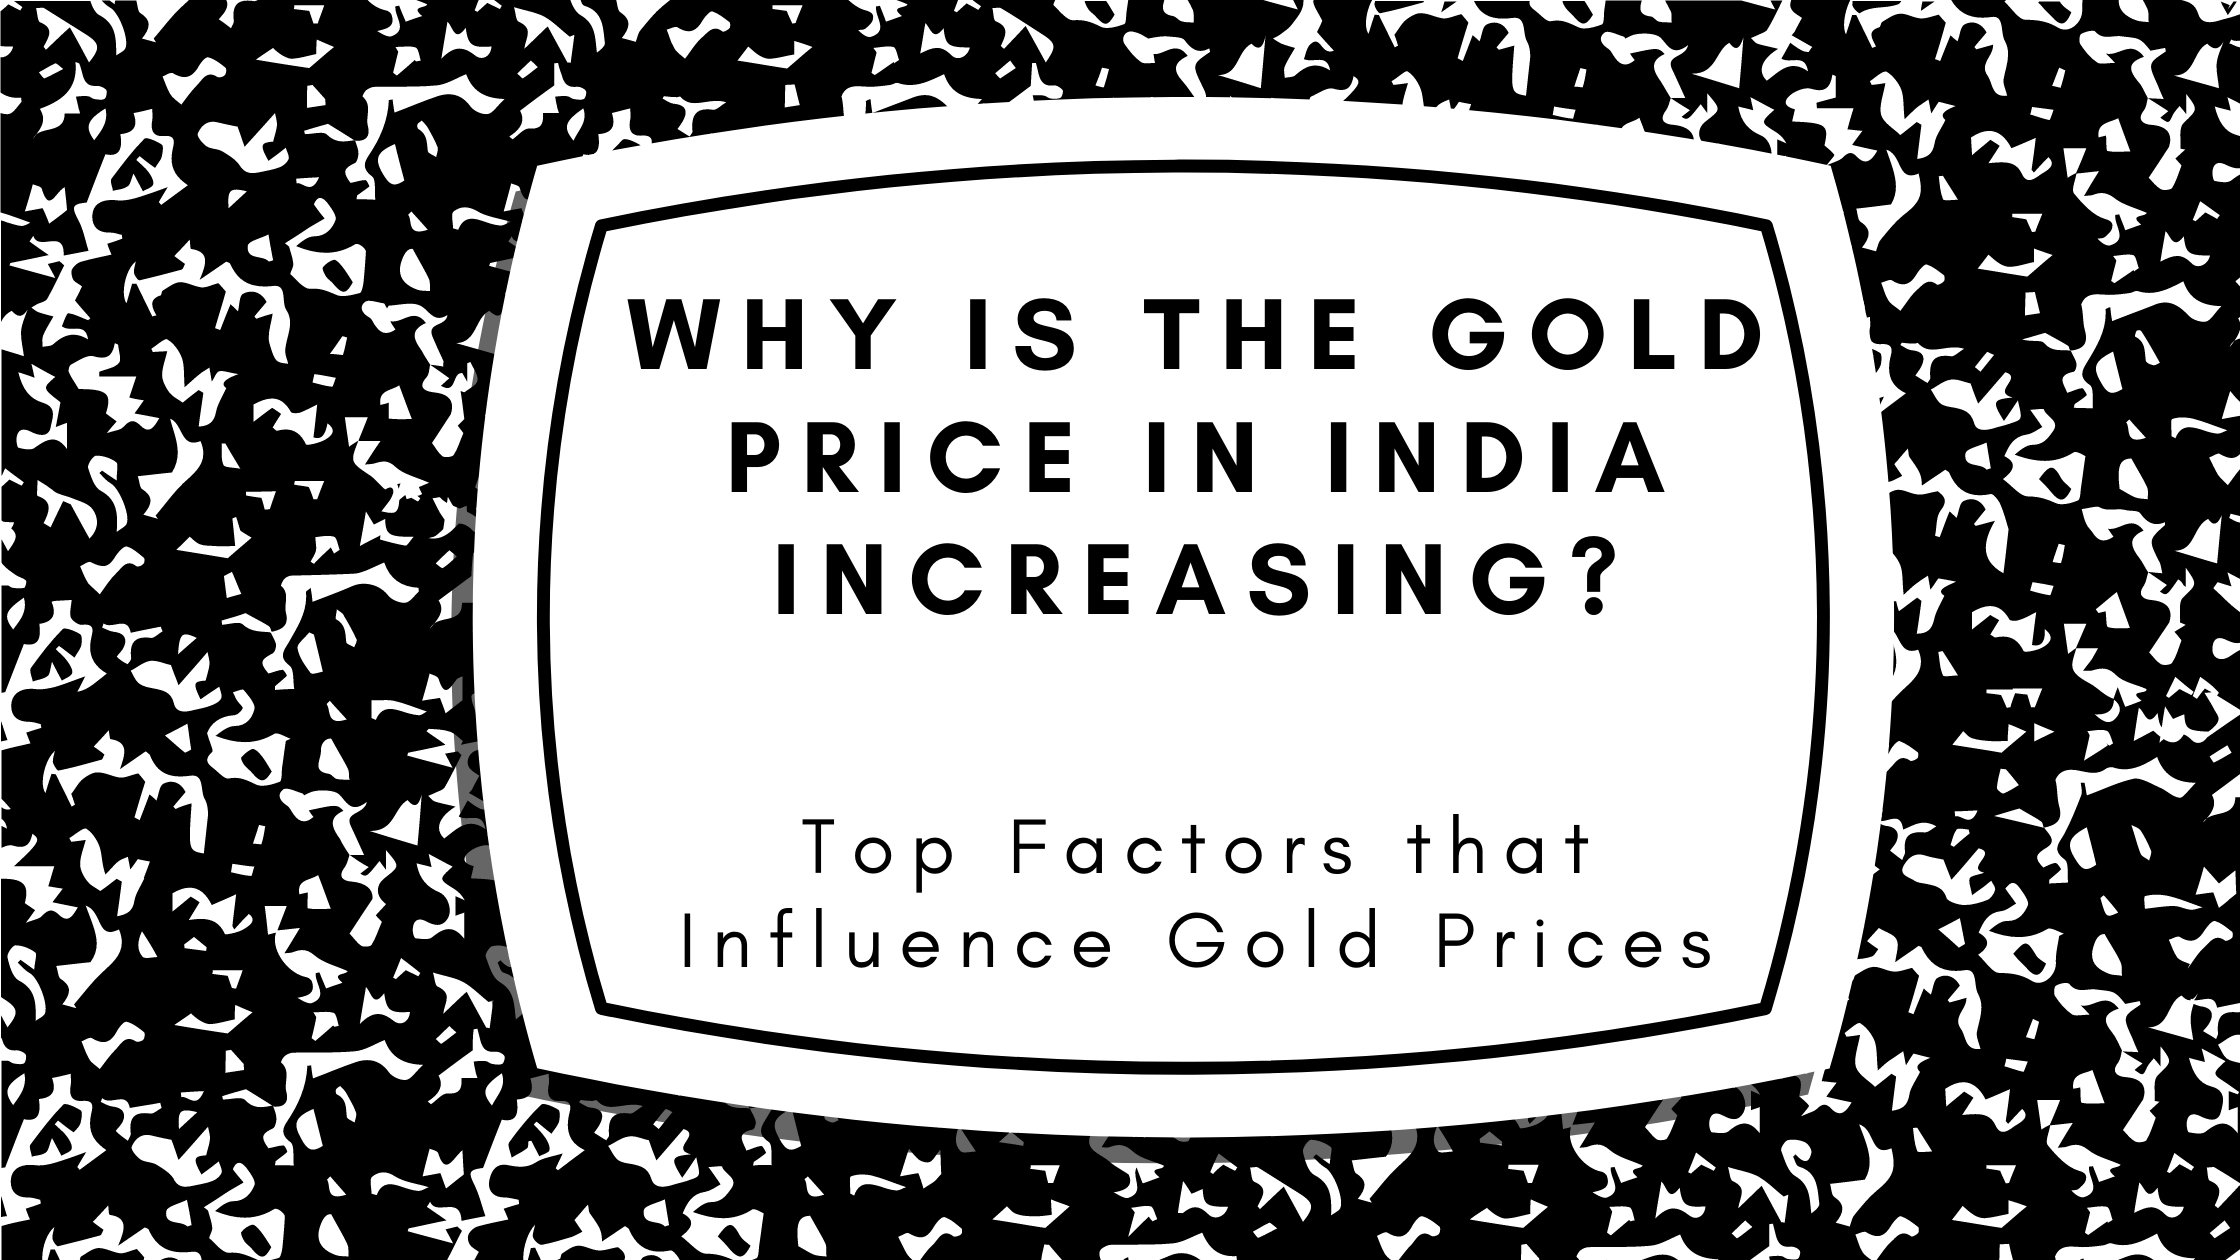 Gold Price in India Increasing